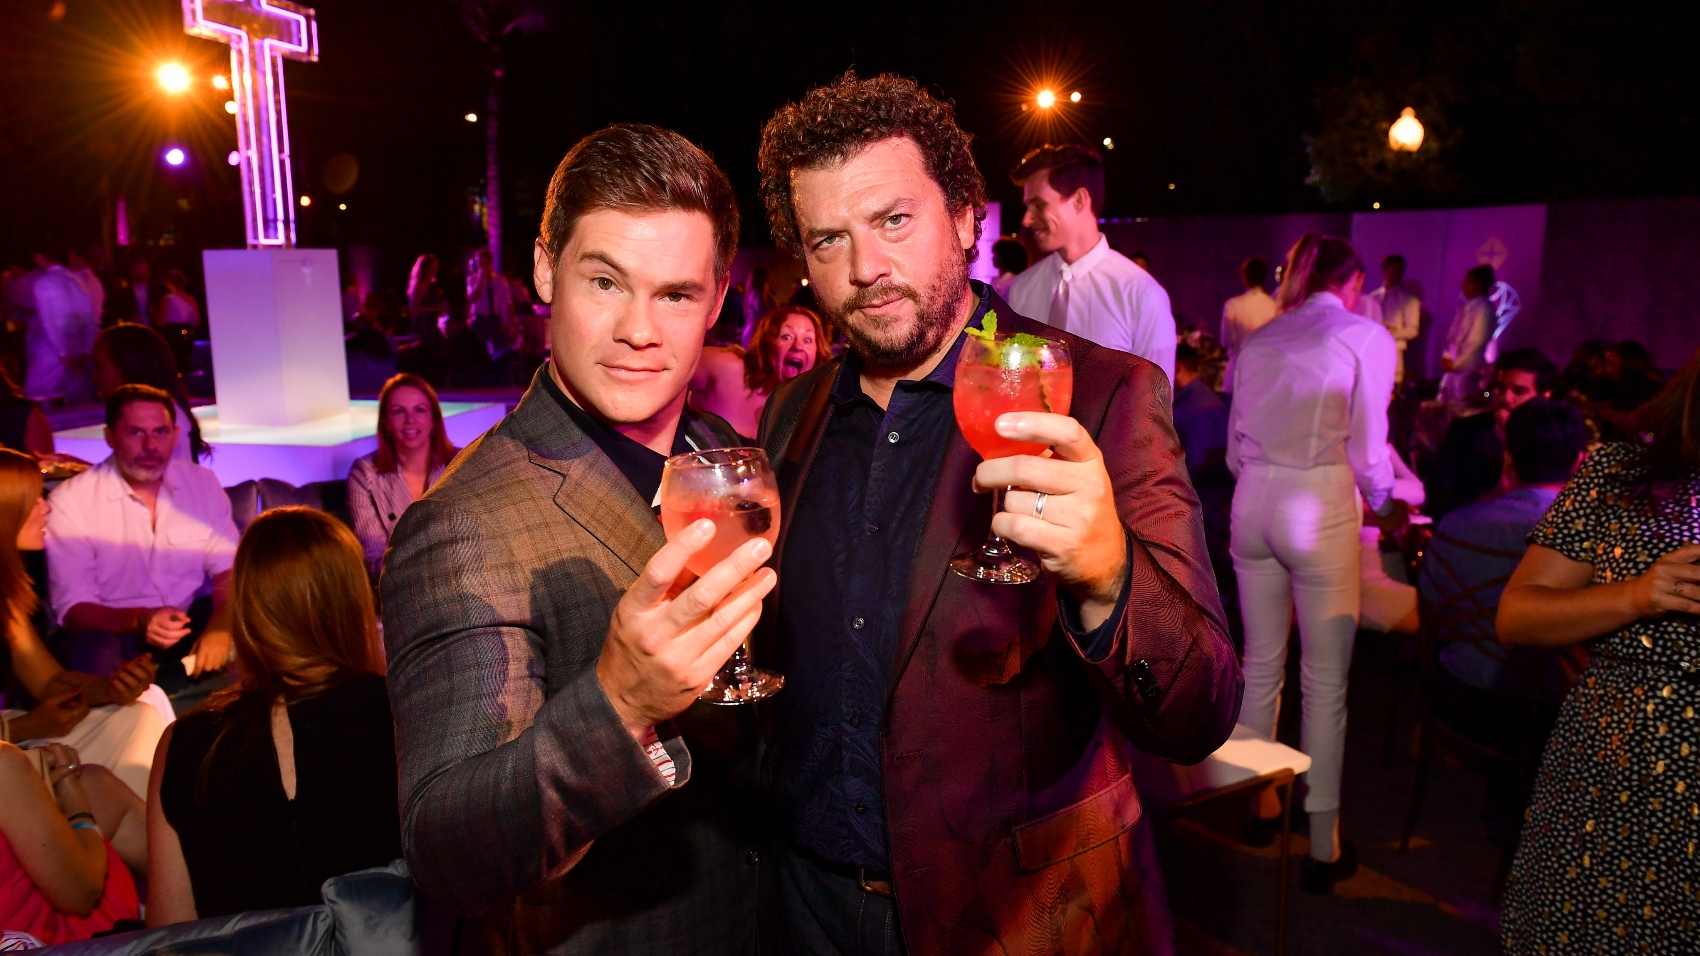 Danny McBride and fellow actor Adam DeVine holding up drinks